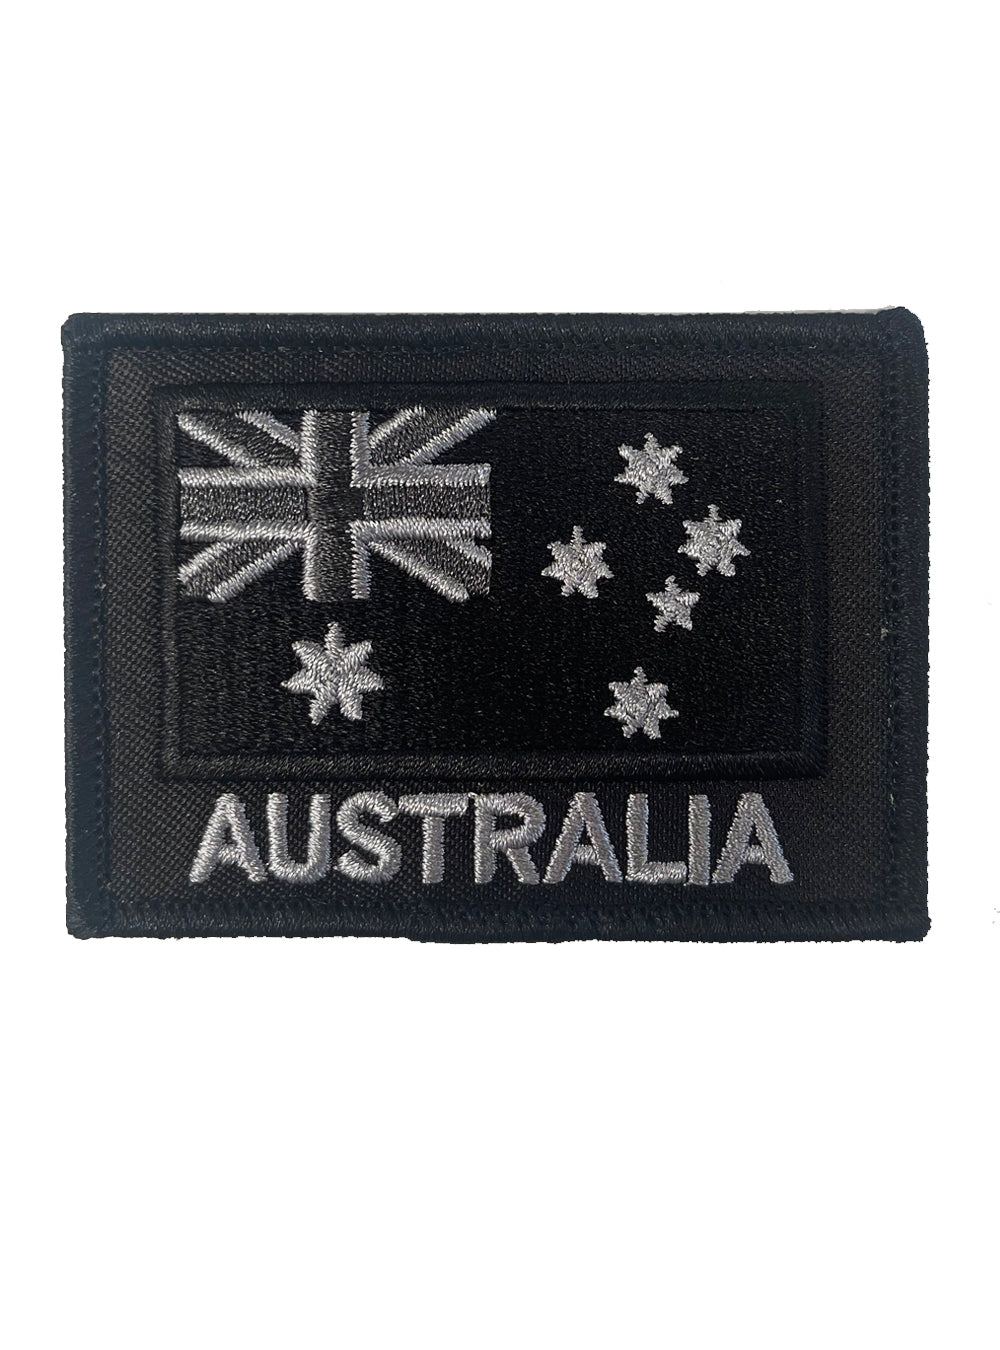 TacSource AUS Flag Patch - Subdued Black